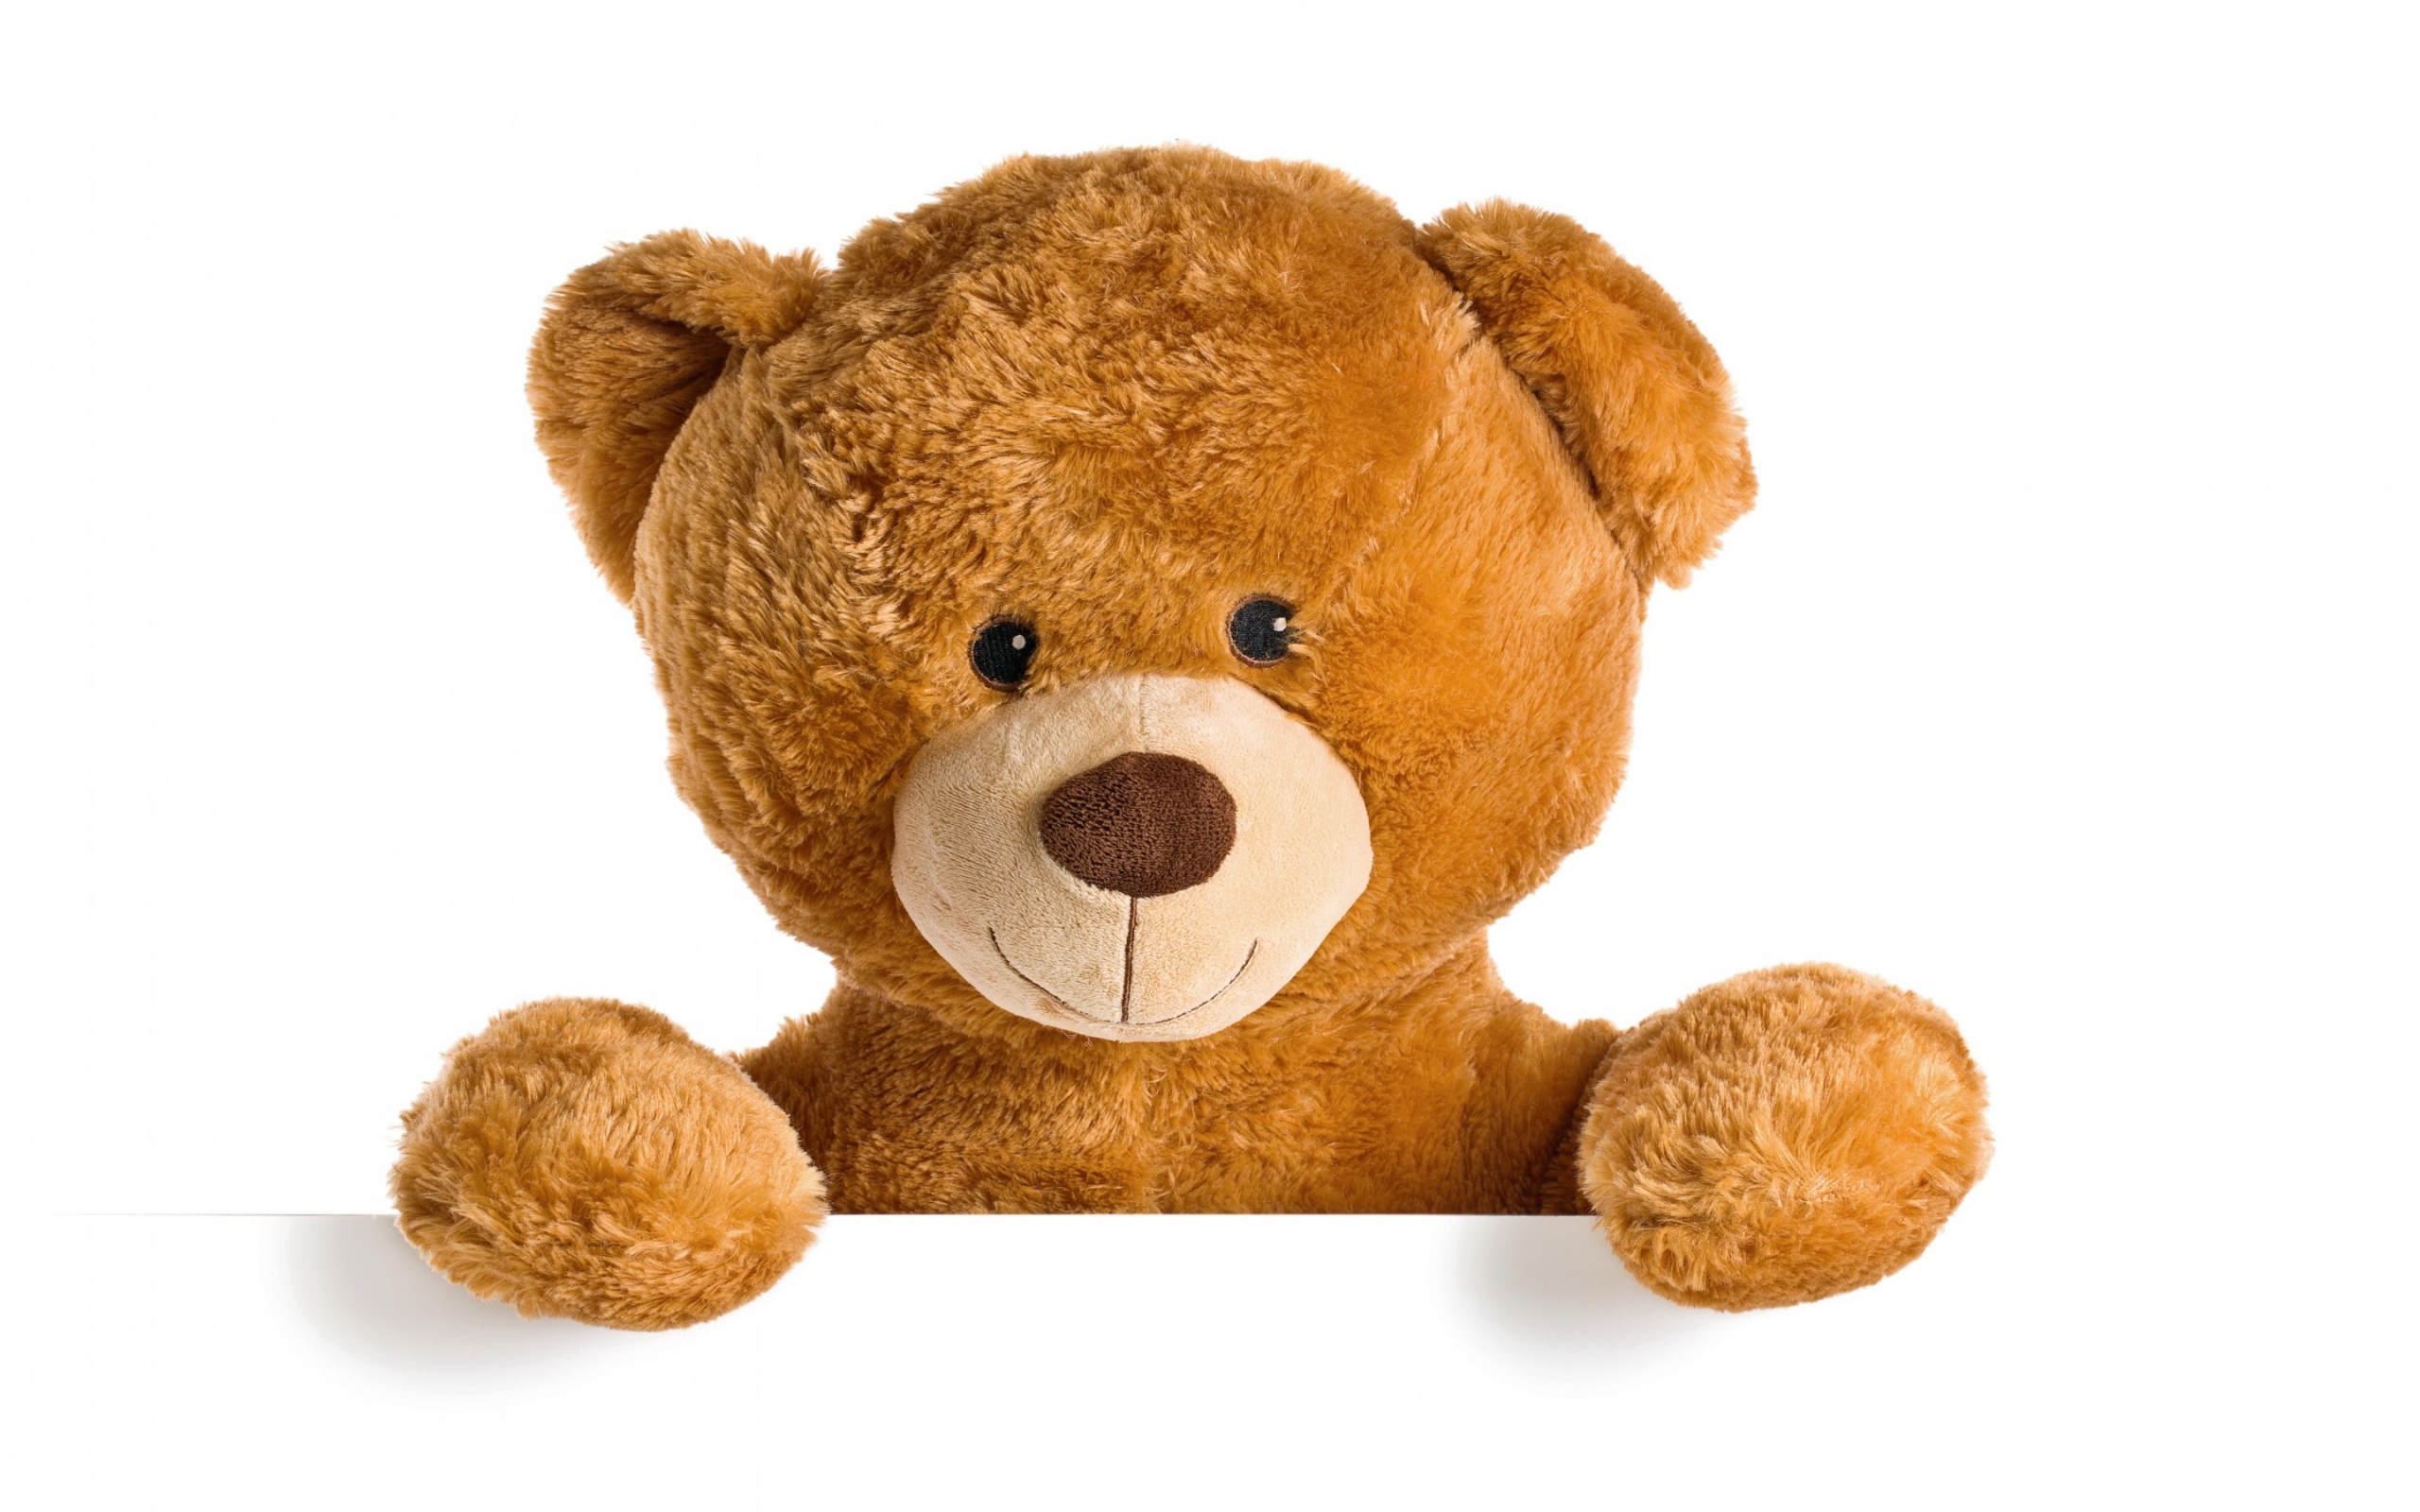 Cute Teddy Bear for 2560 x 1600 widescreen resolution